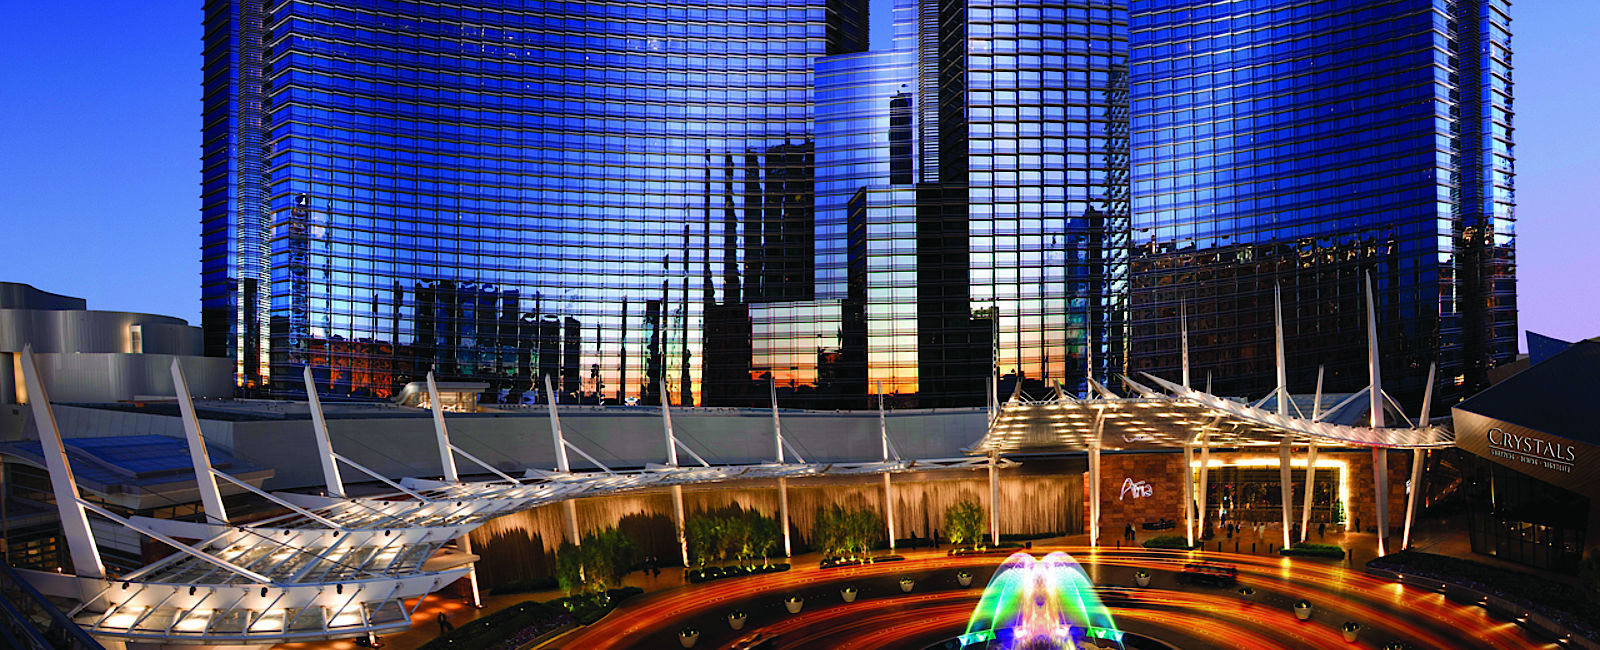 HOTELTEST
 Aria Resort & Casino 
 Megapalast mit Spitzengastronomie 